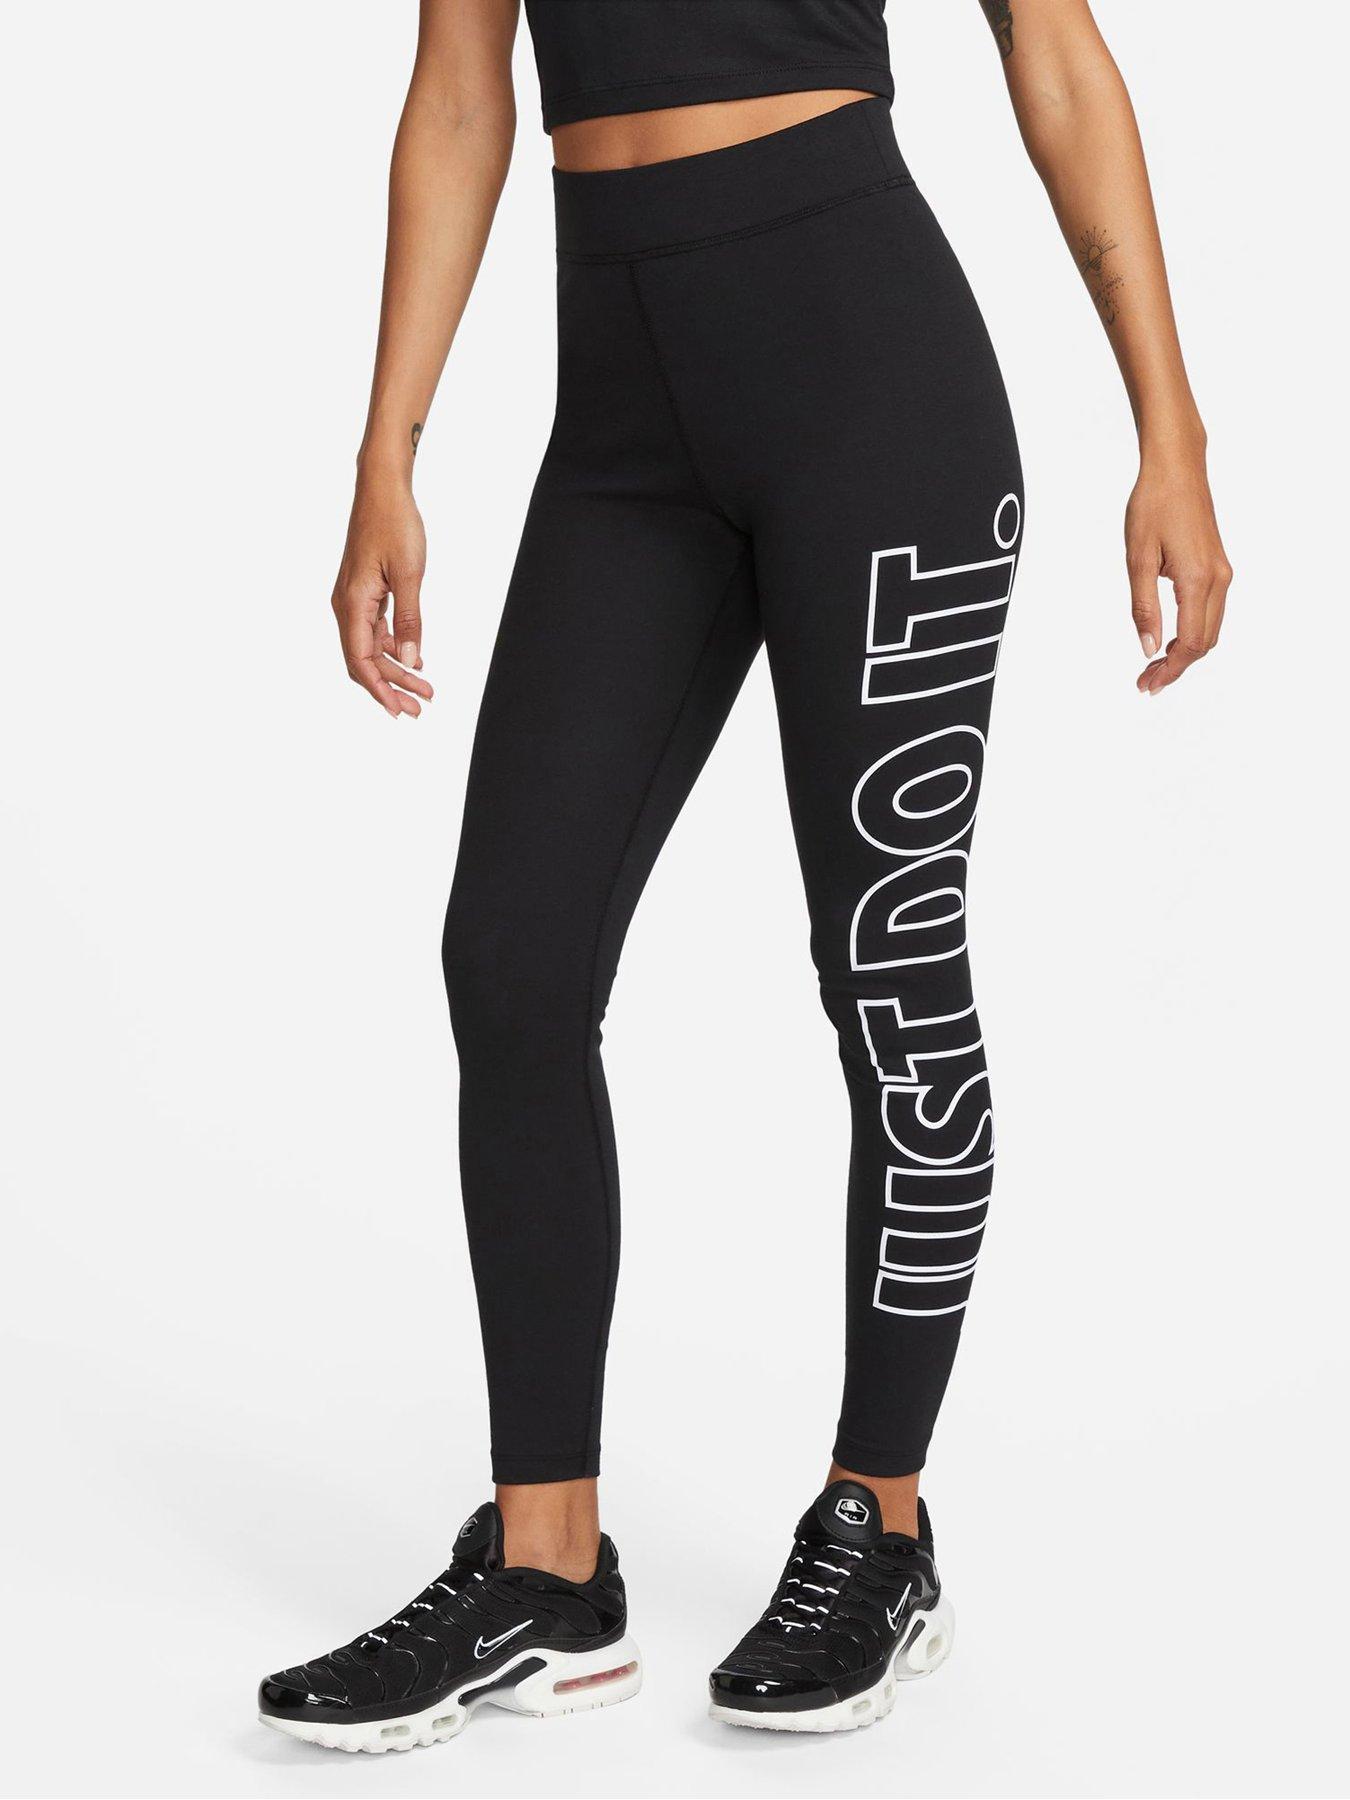 adidas Yoga Essentials High-Waisted Leggings (Plus Size) - Black